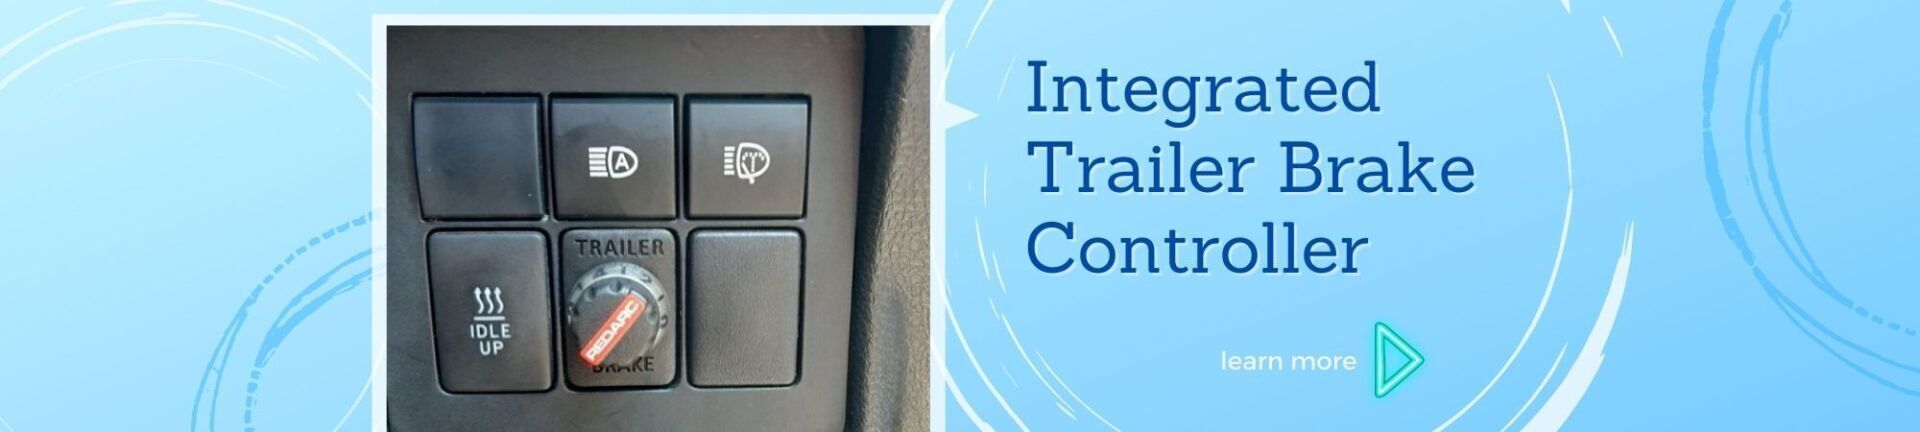 Integrated Trailer Brake Controller Installation Perth